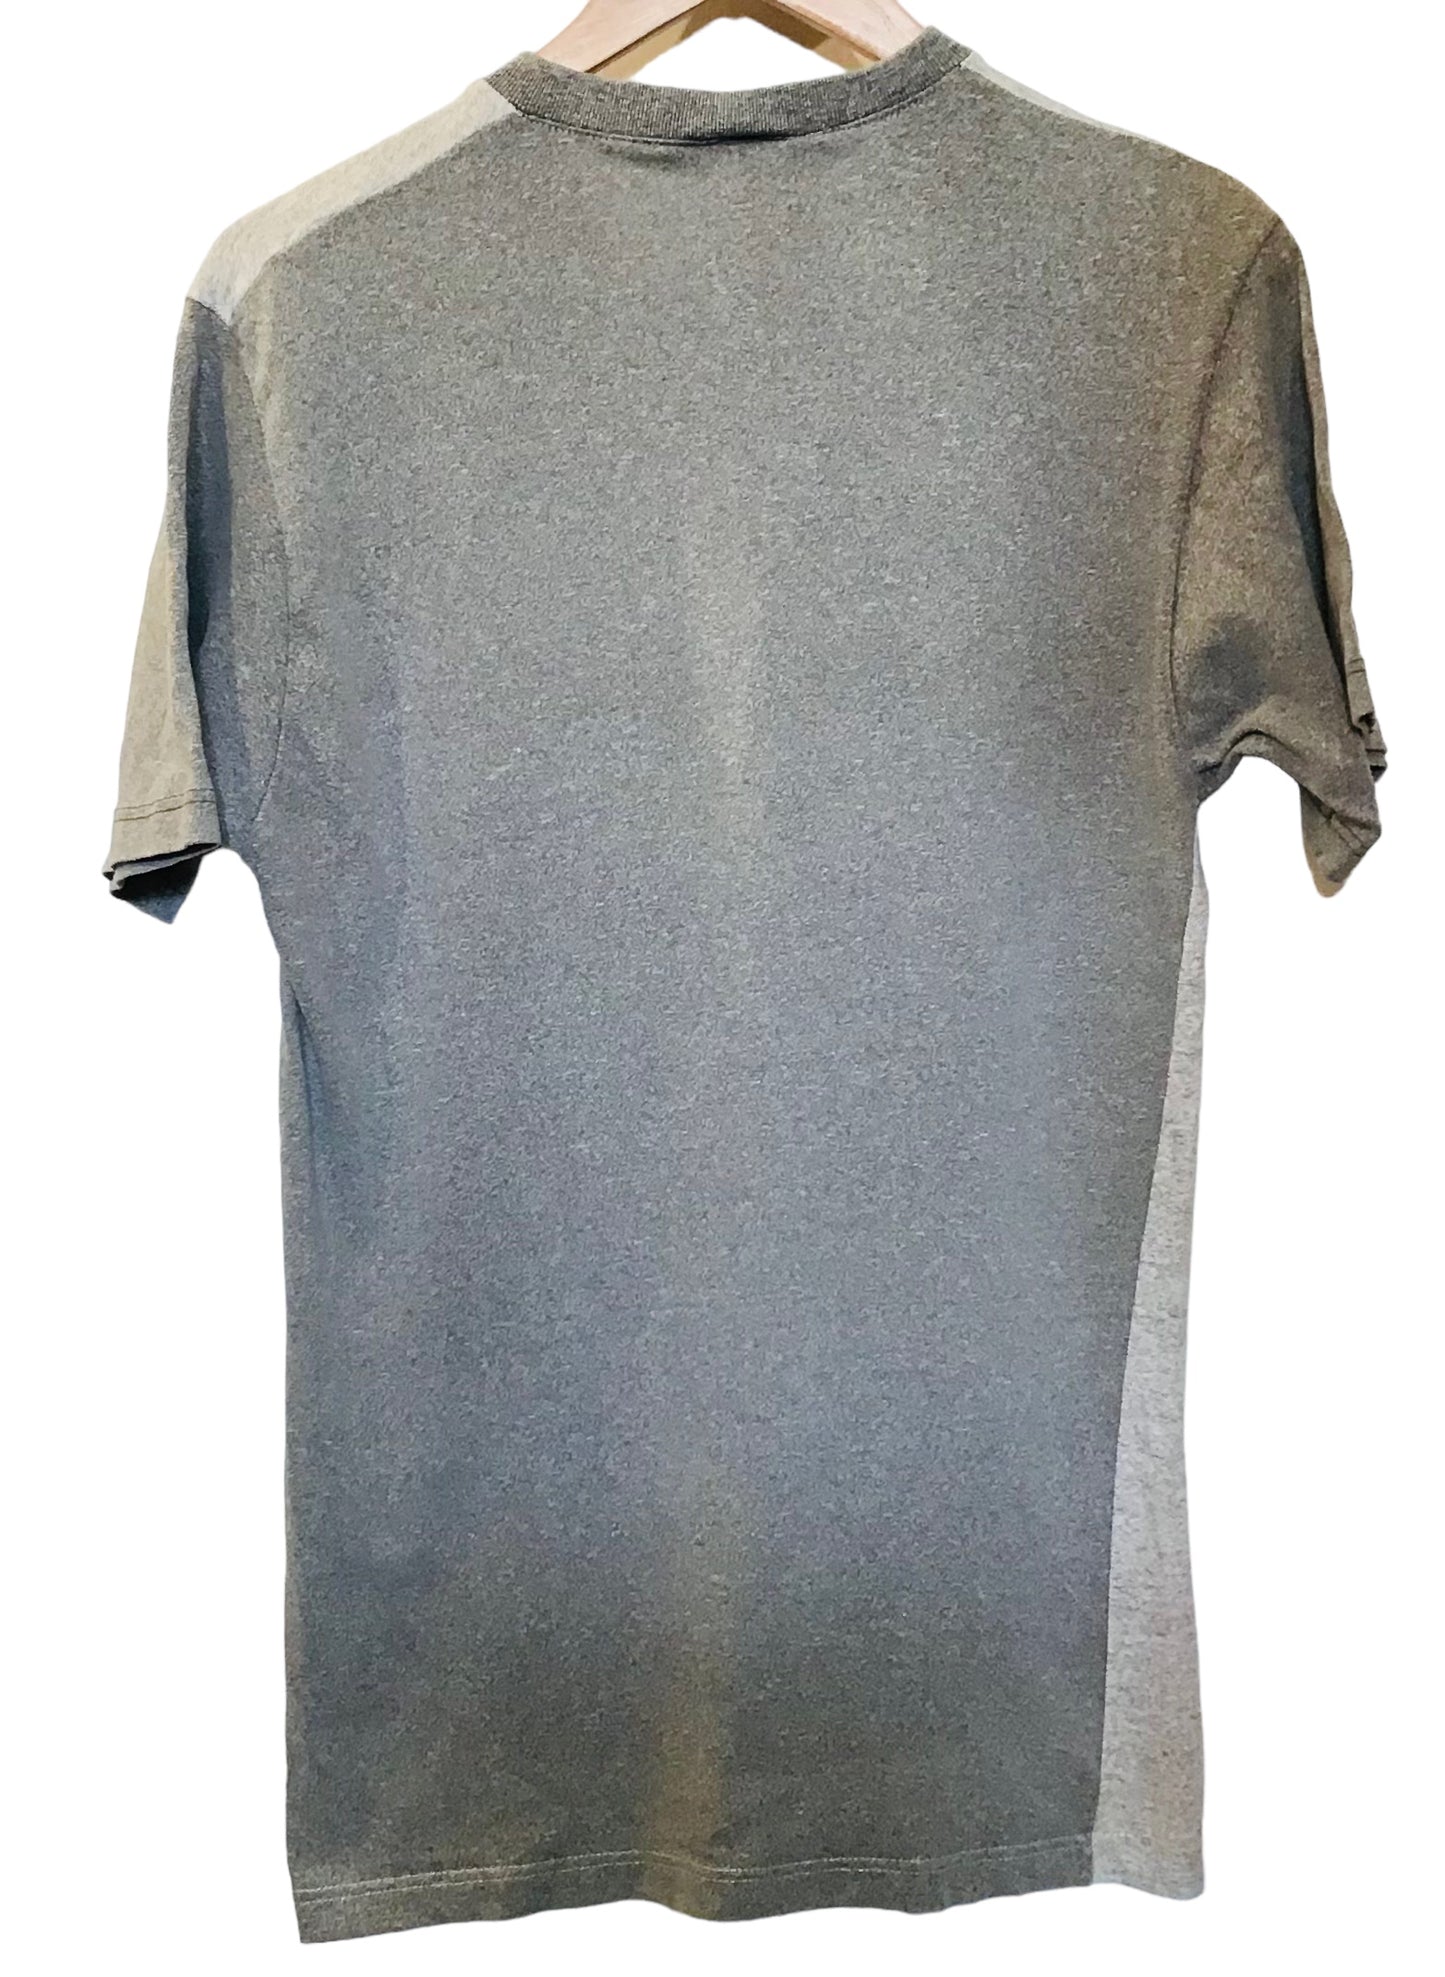 Champion V Neck Short Sleeve Two Tone Grey T Shirt (Size S)